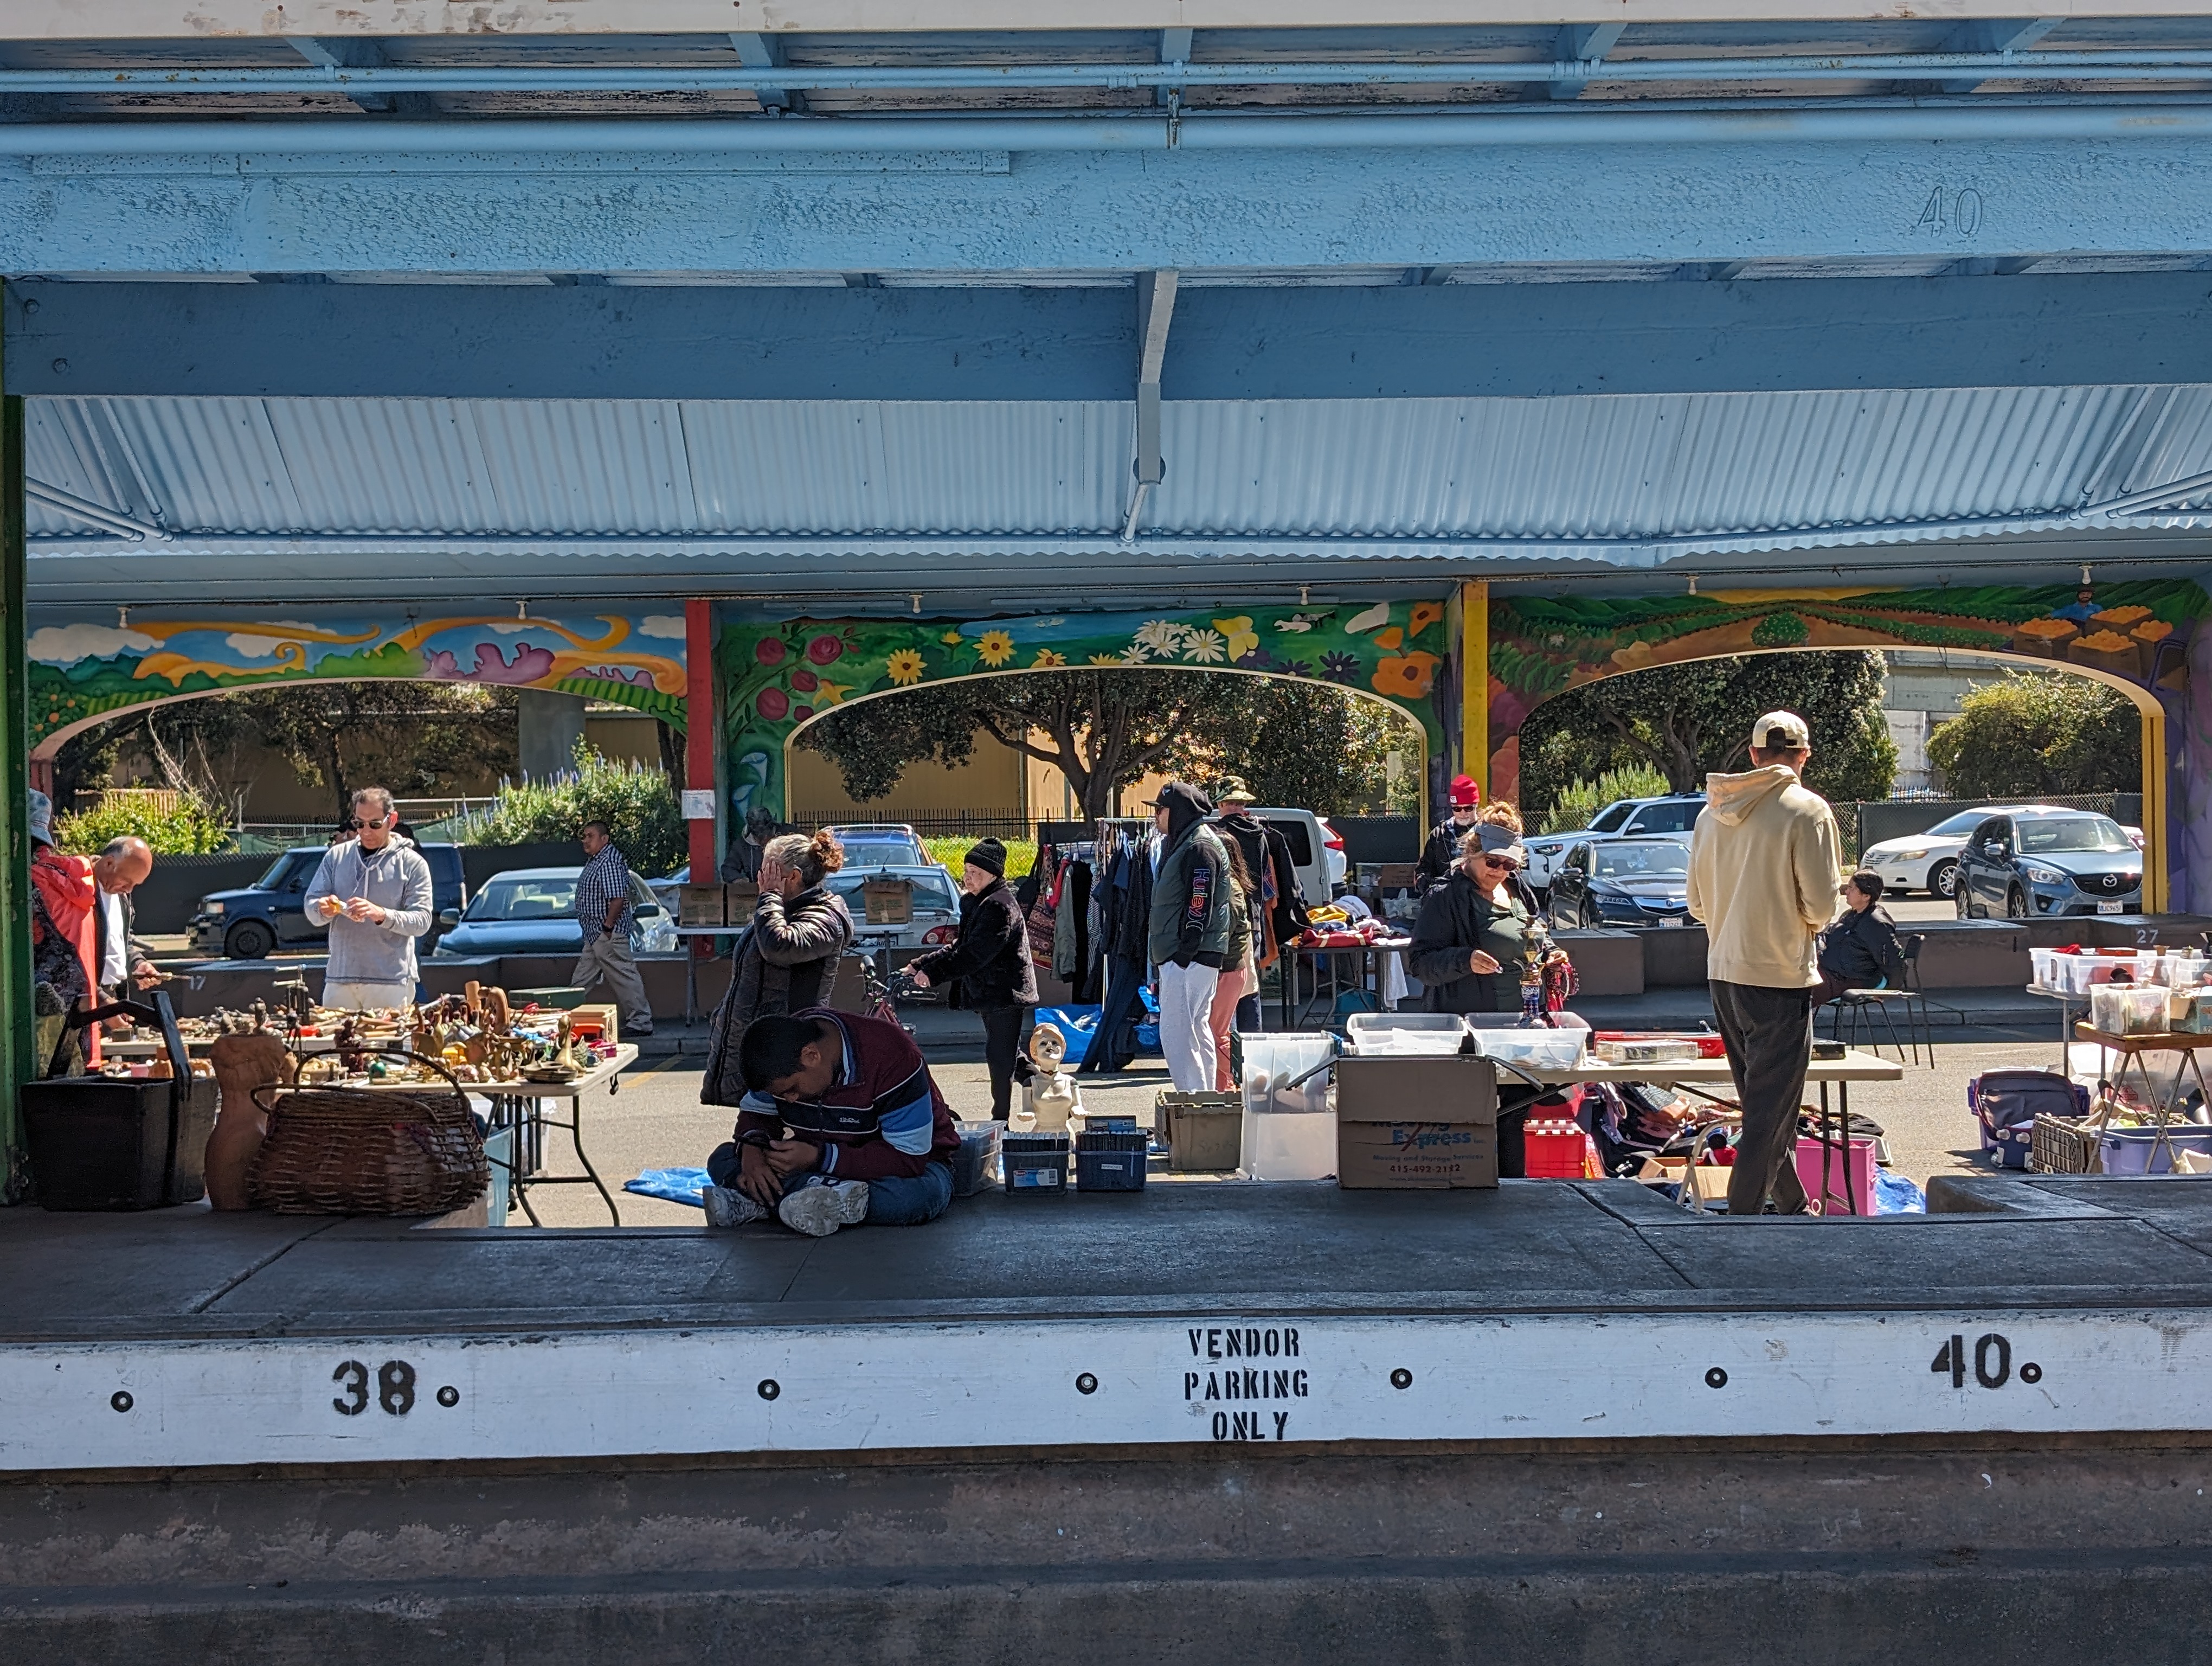 Vendors at the Alemany Flea Market aim to remain operational